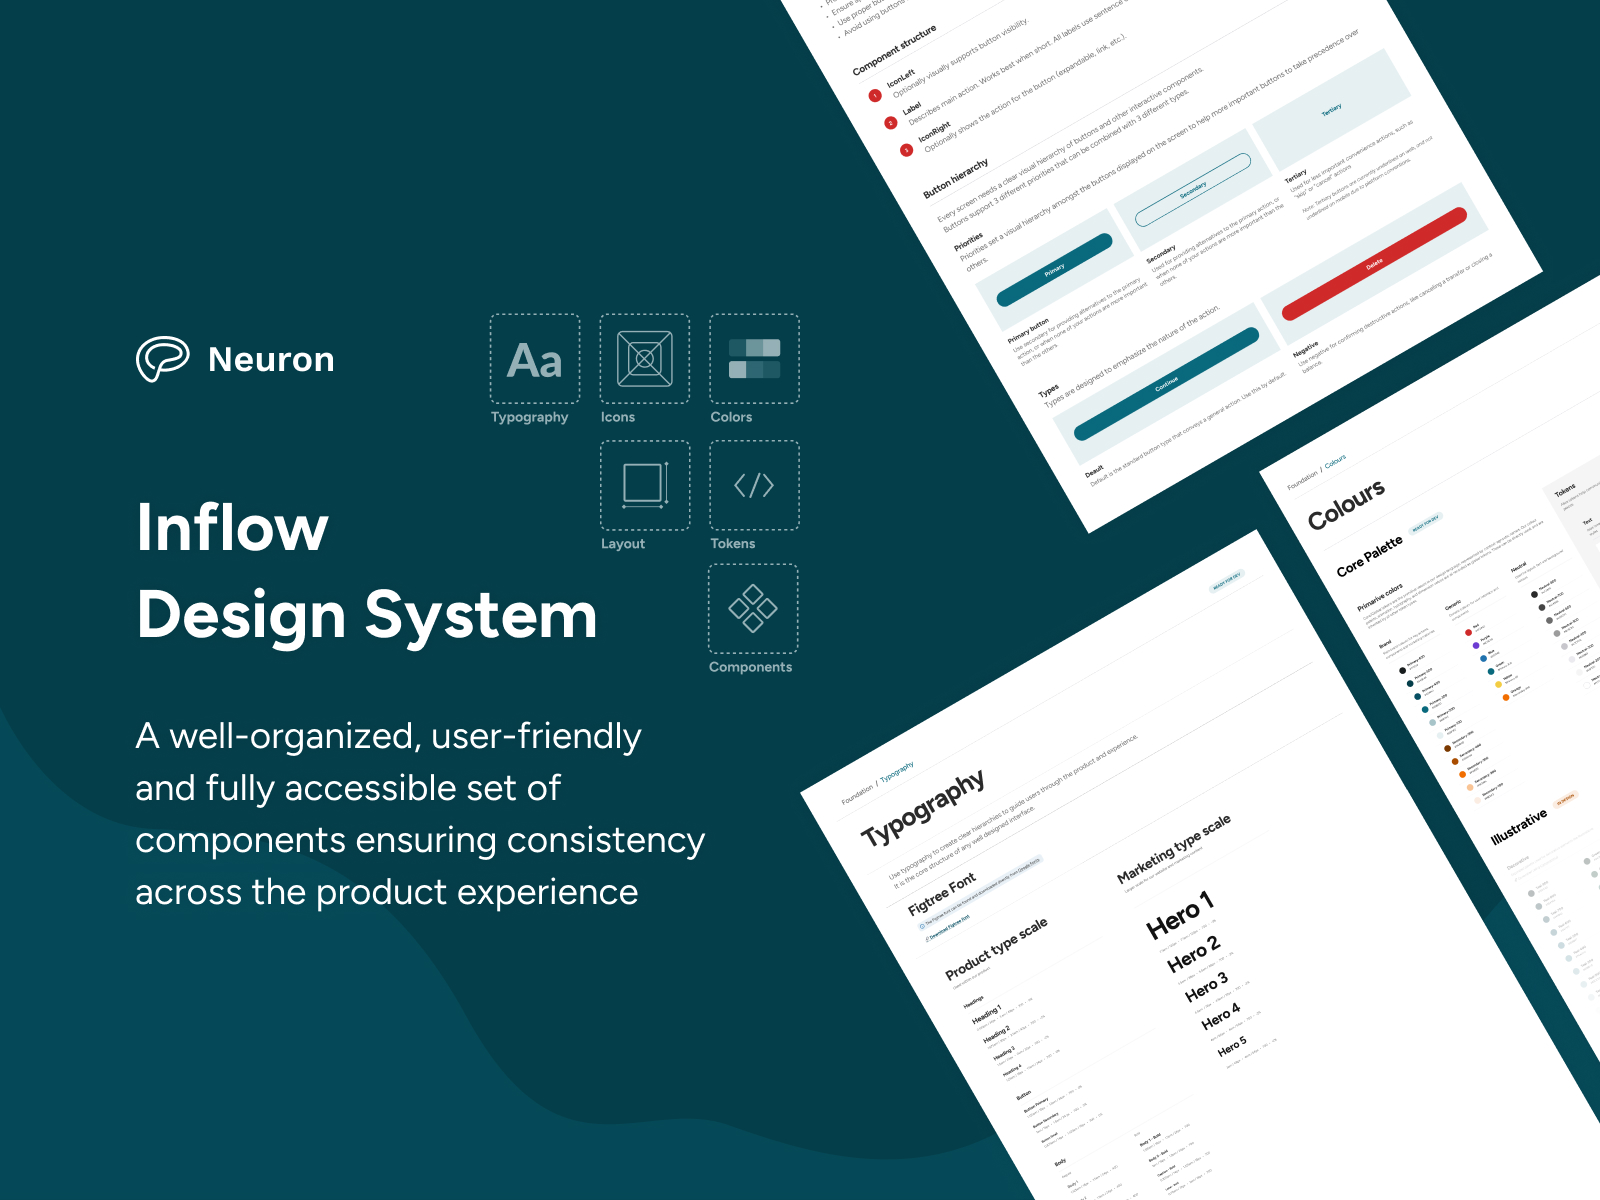 Inflow, Design system